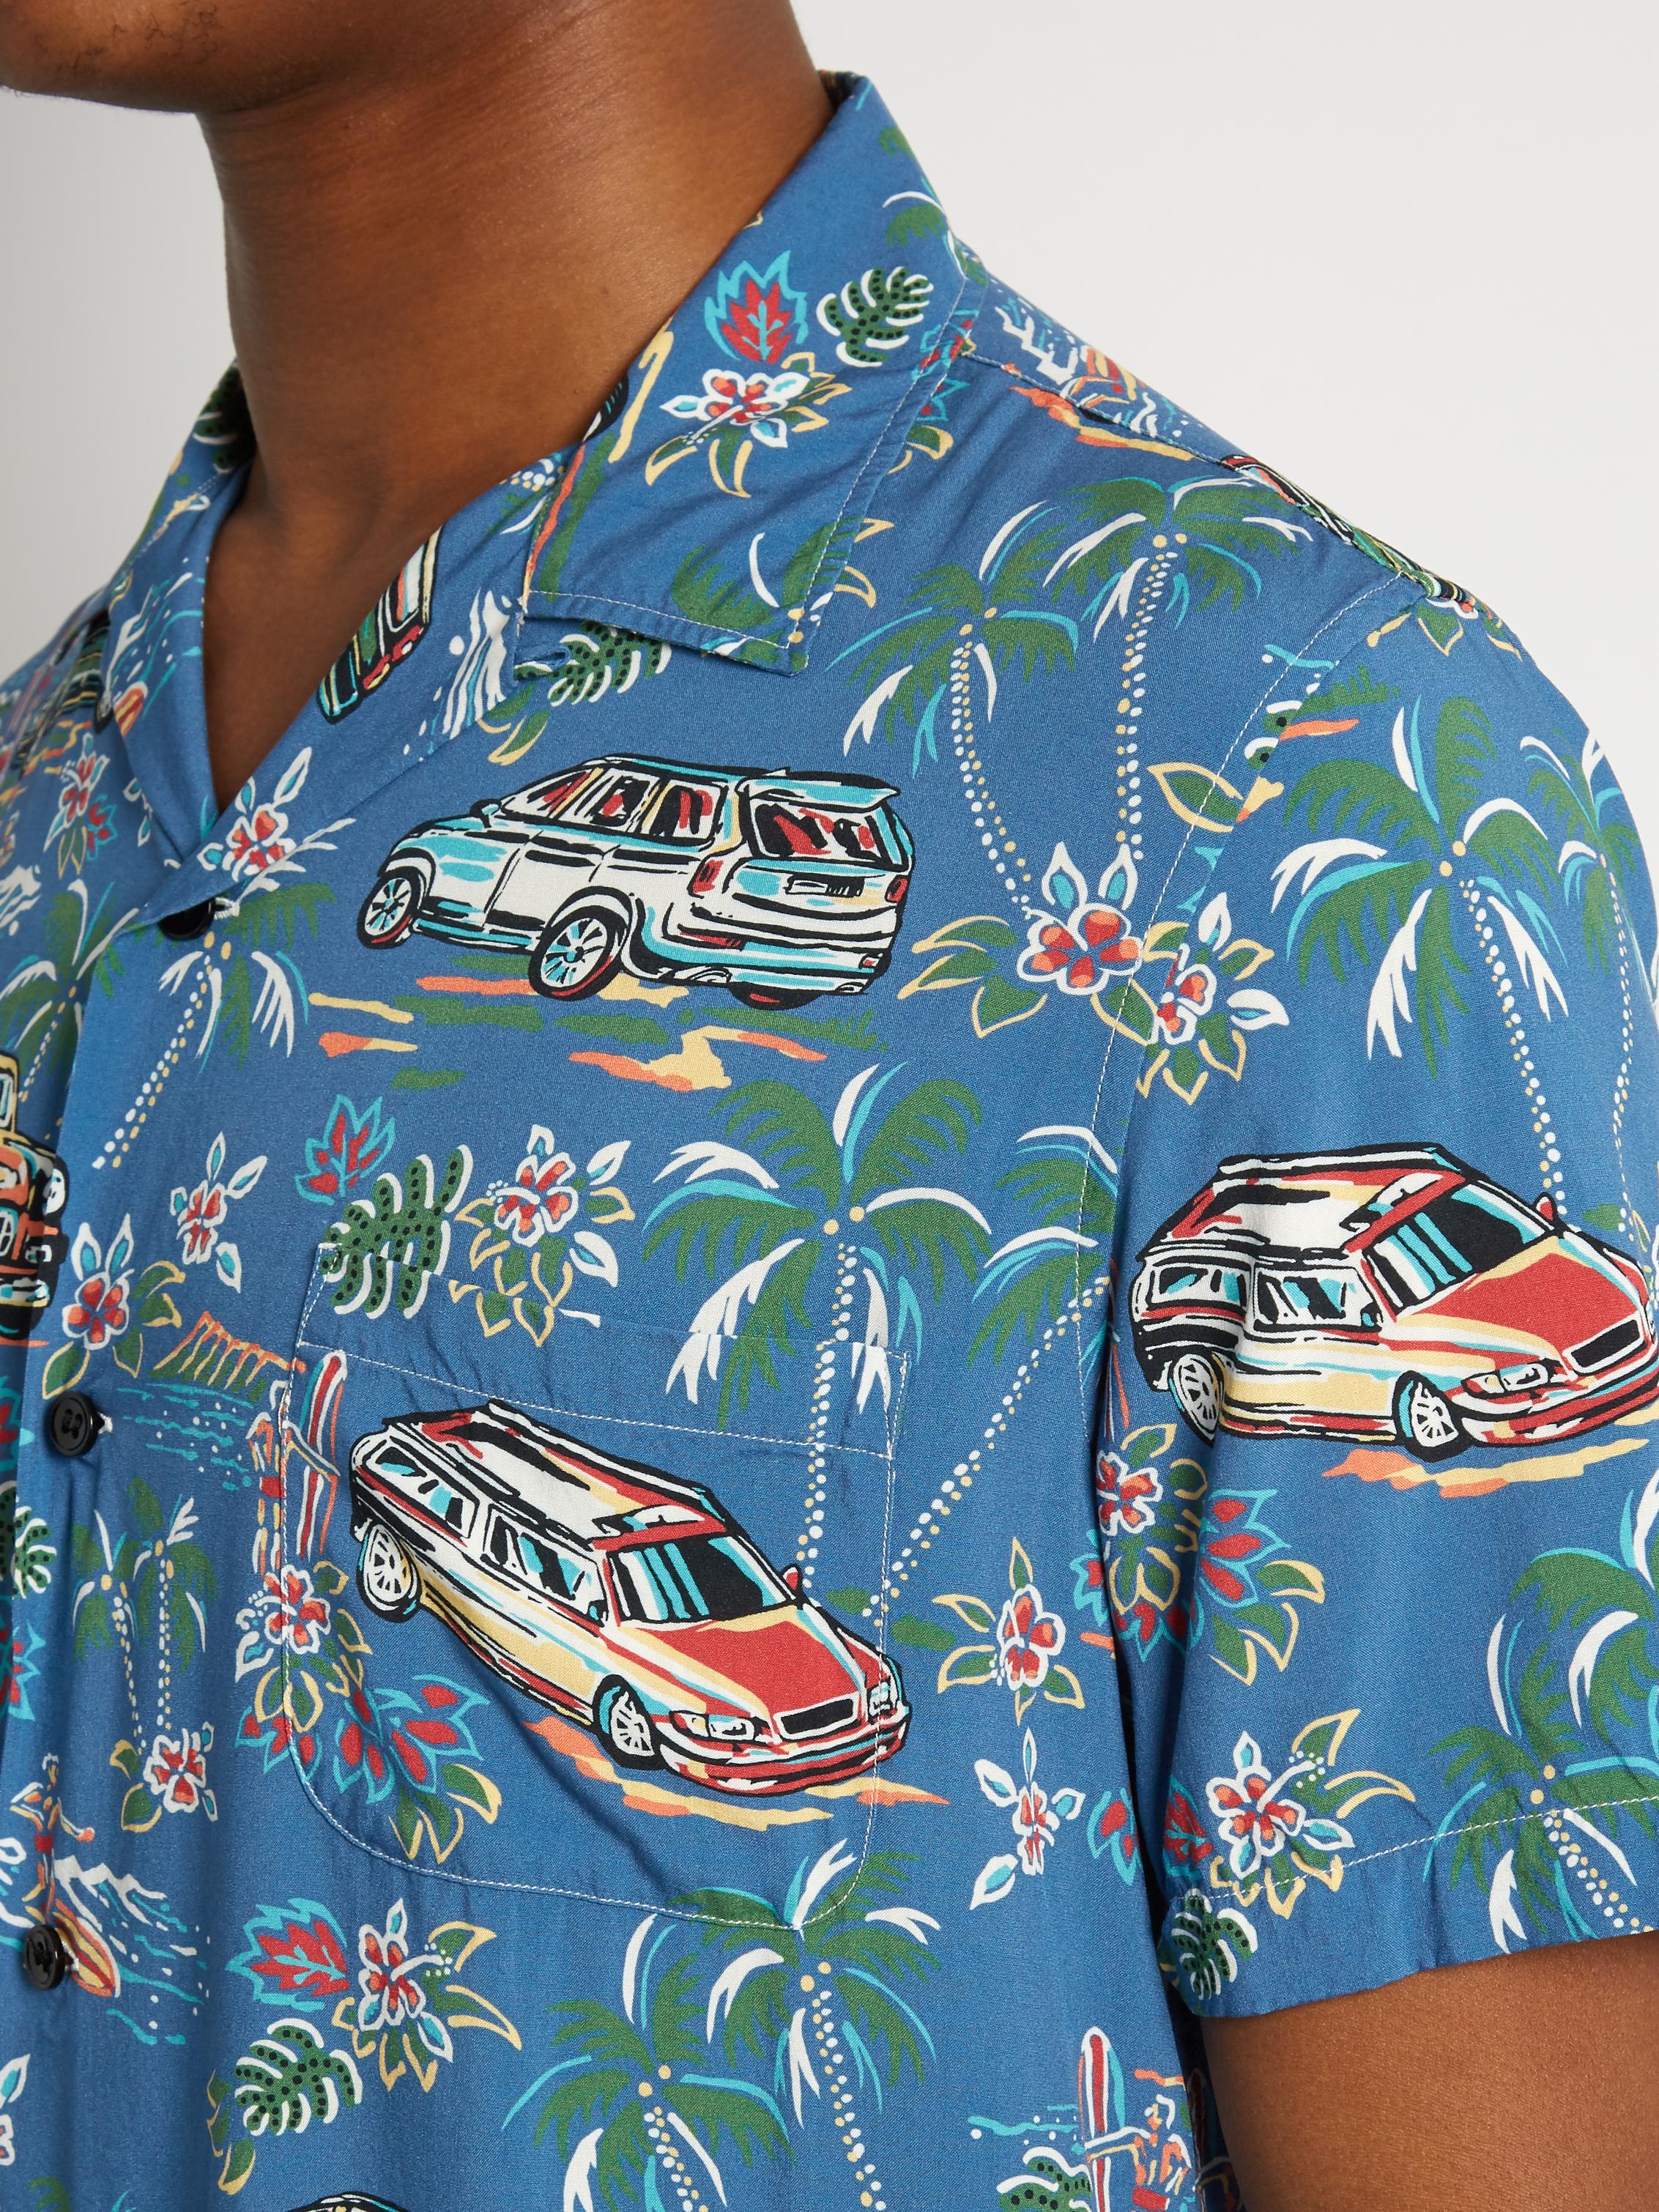 Saint Laurent Classic Hawaiian Shirt in Blue for Men | Lyst